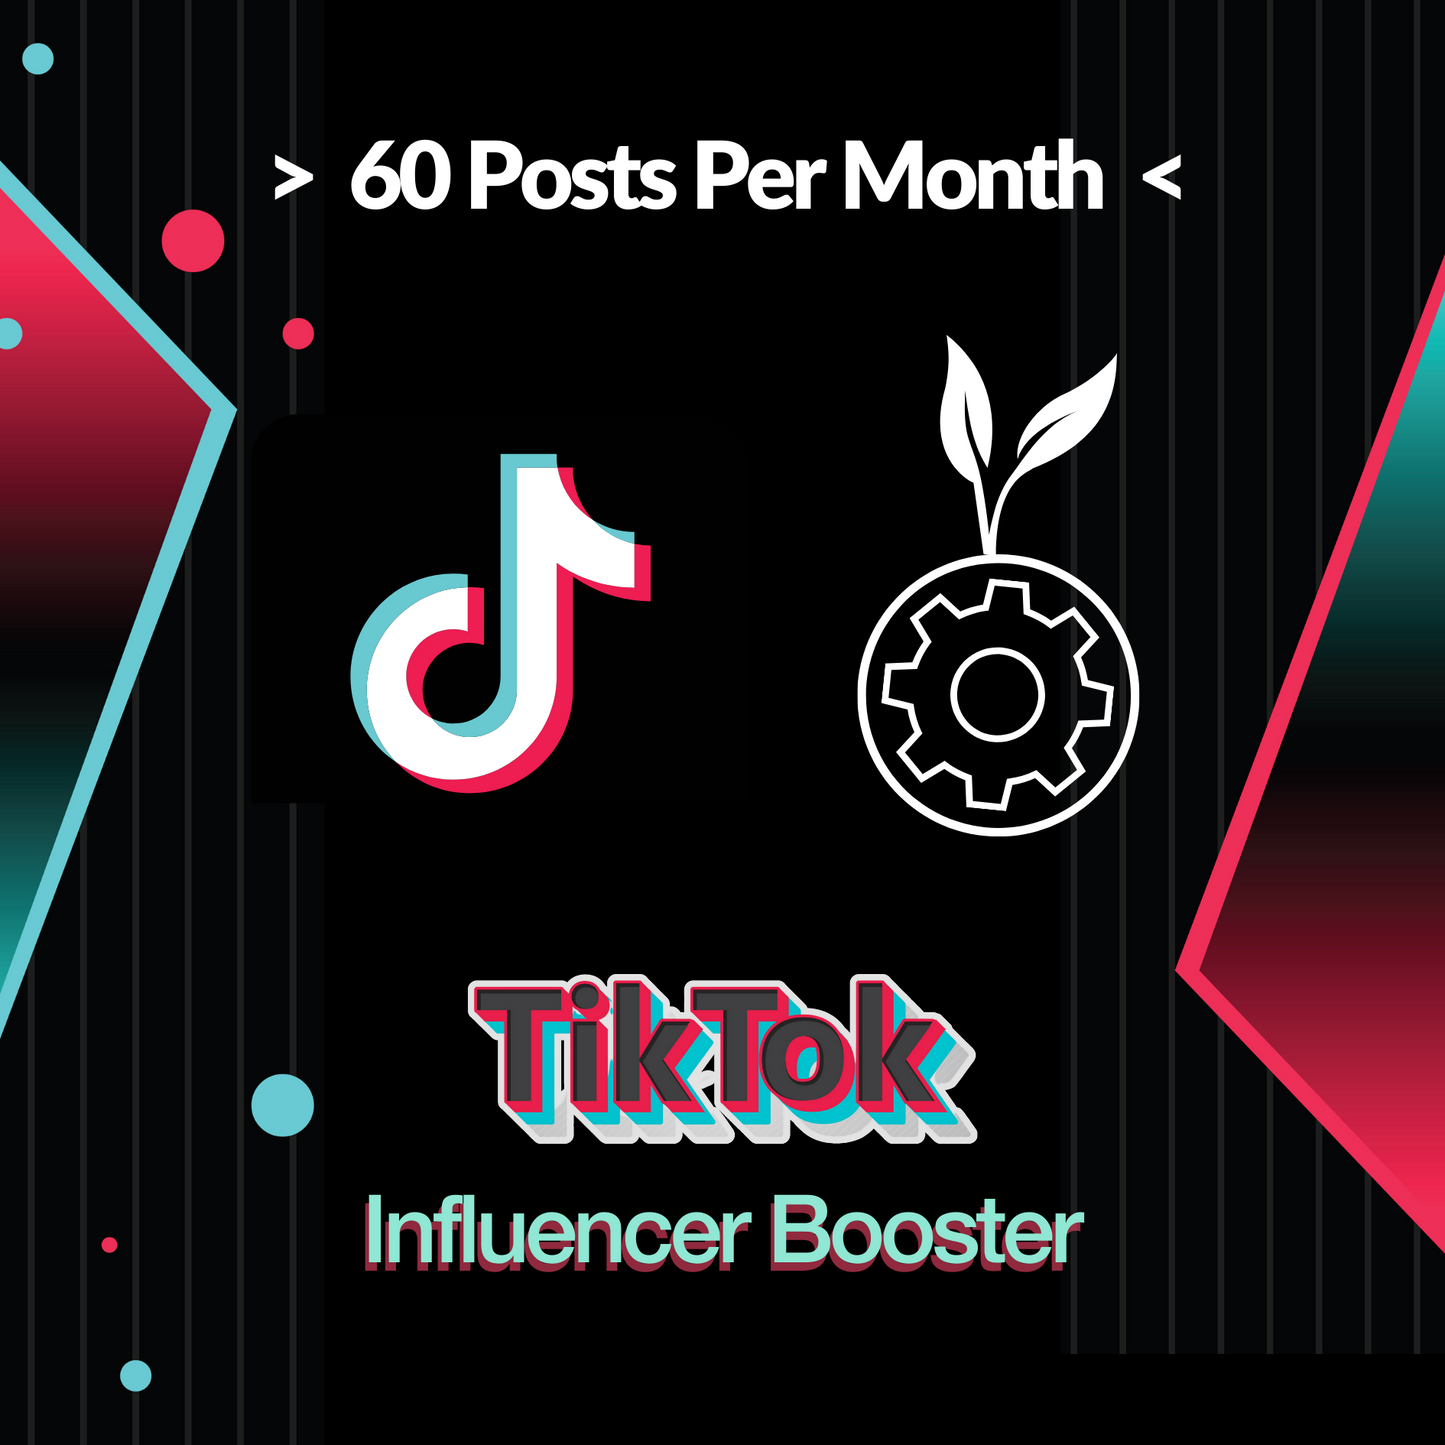 TikTok Influencer Booster | 60 Posts Per Month